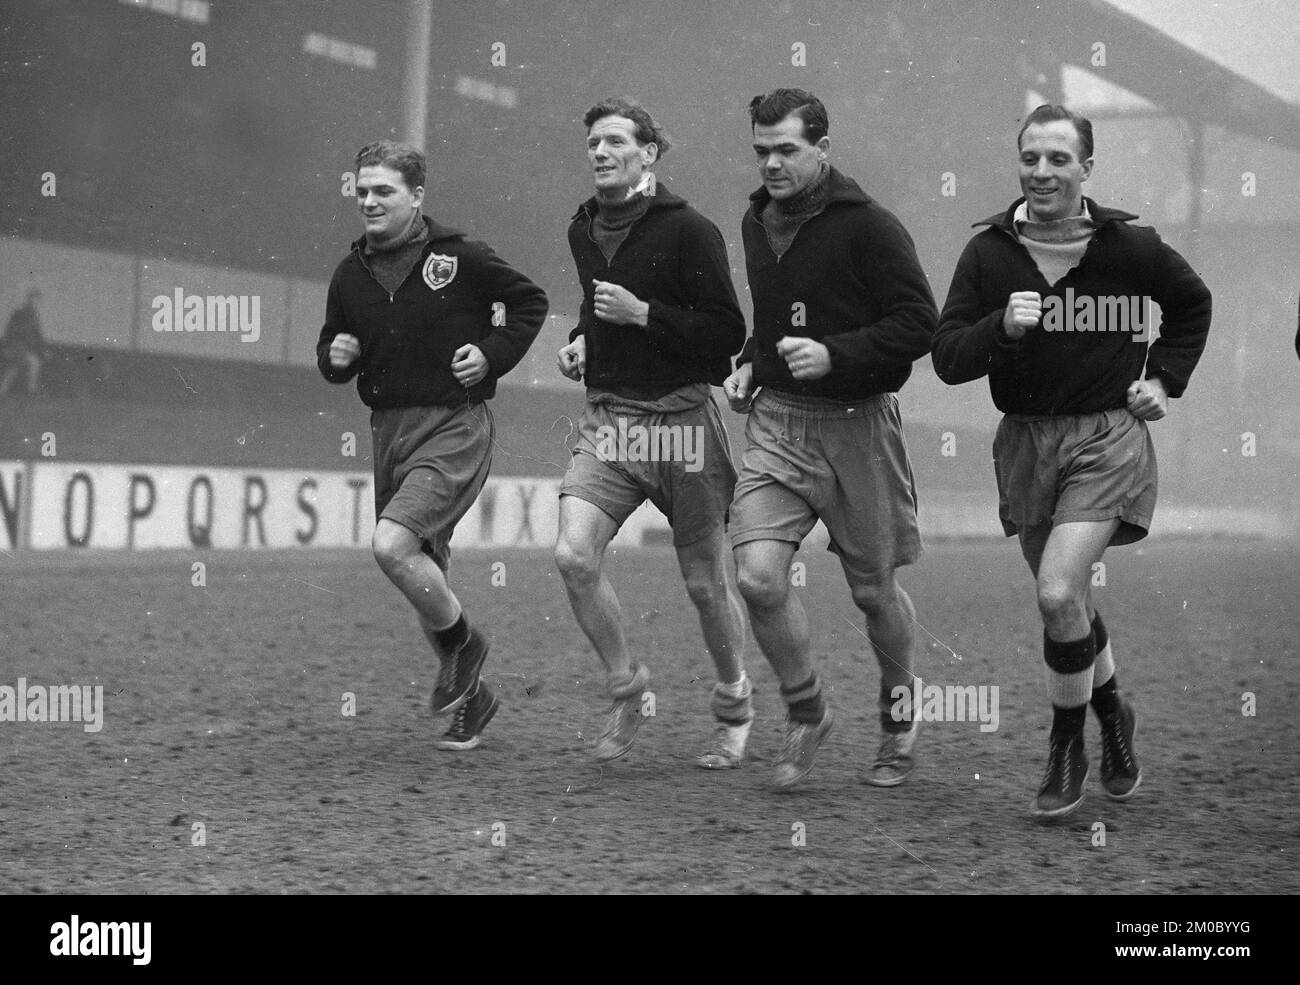 Tottenham Hotspur Fußballer LtoR Billy Walters, Les Bennett, Len Duquemin, Eddie Baily, Les Medley Training auf White Hart Lane Pitch 1951 Stockfoto